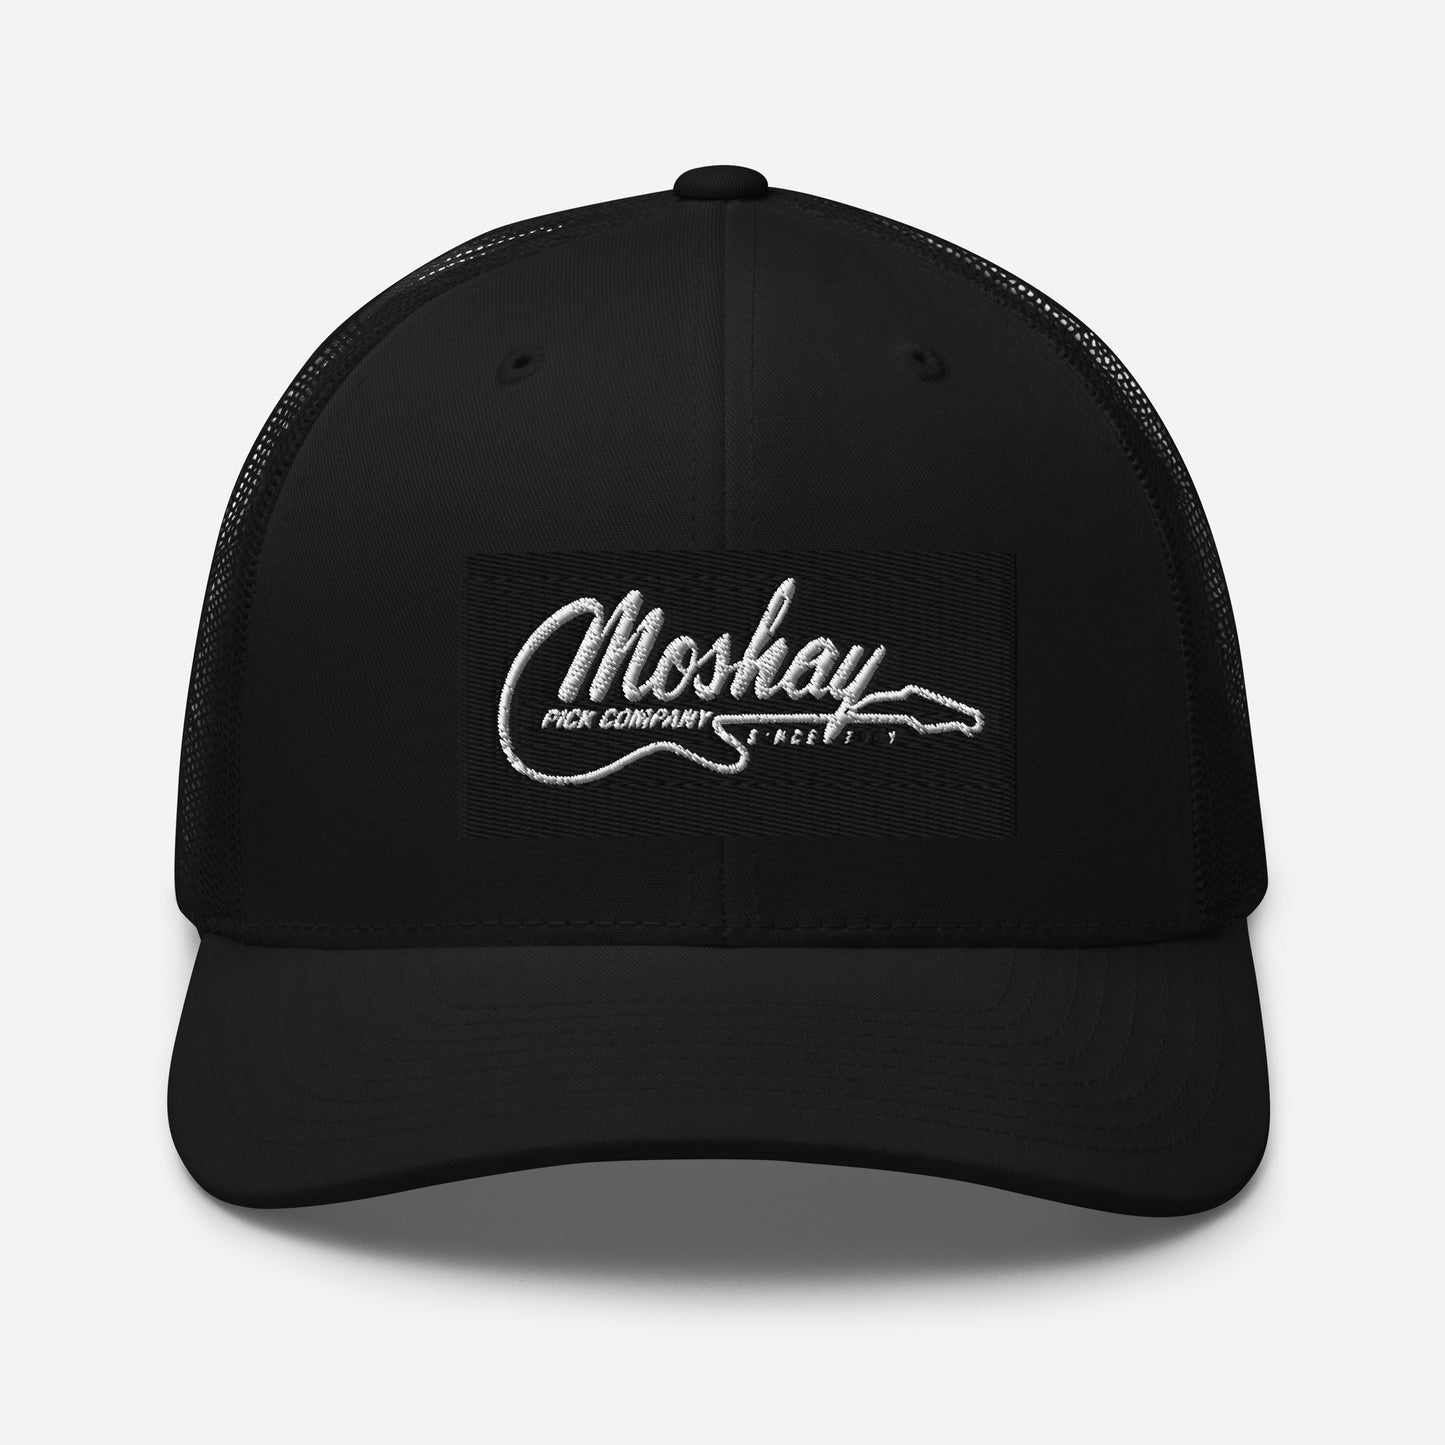 Moshay Pick Trucker Cap